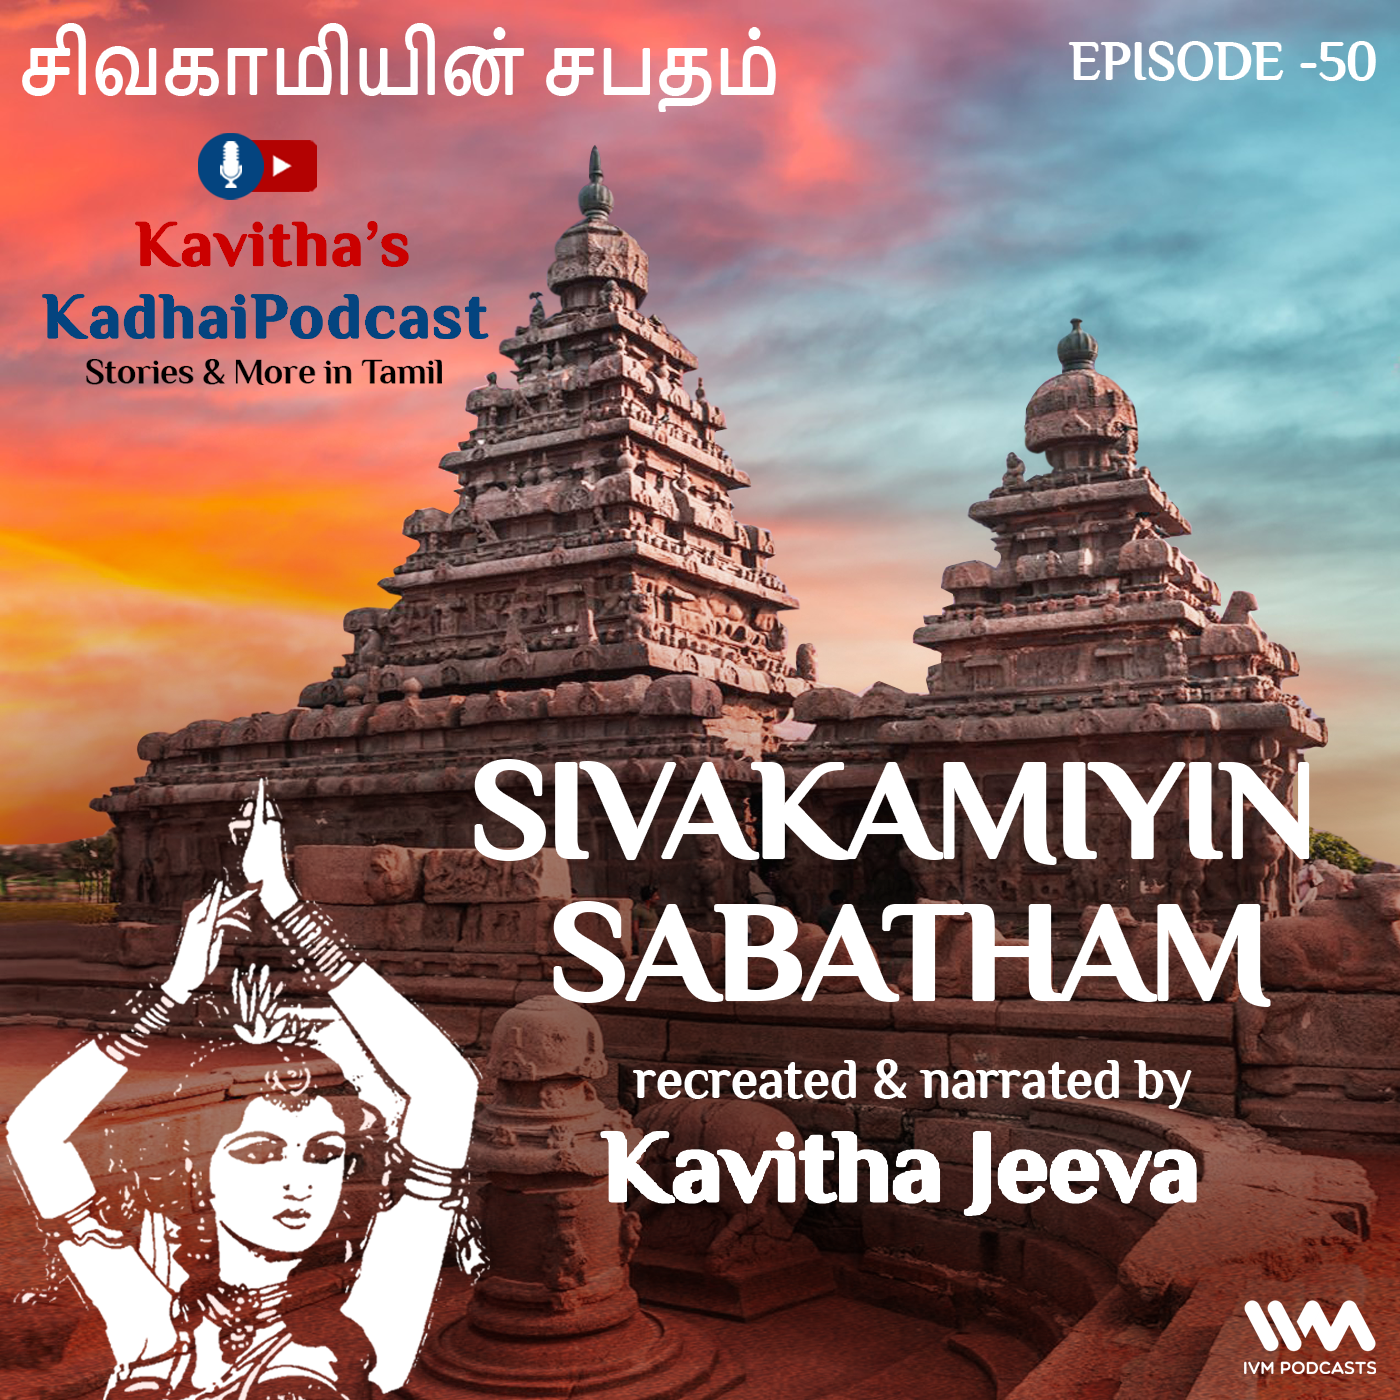 KadhaiPodcast’s Sivakamiyin Sabatham - Episode # 50